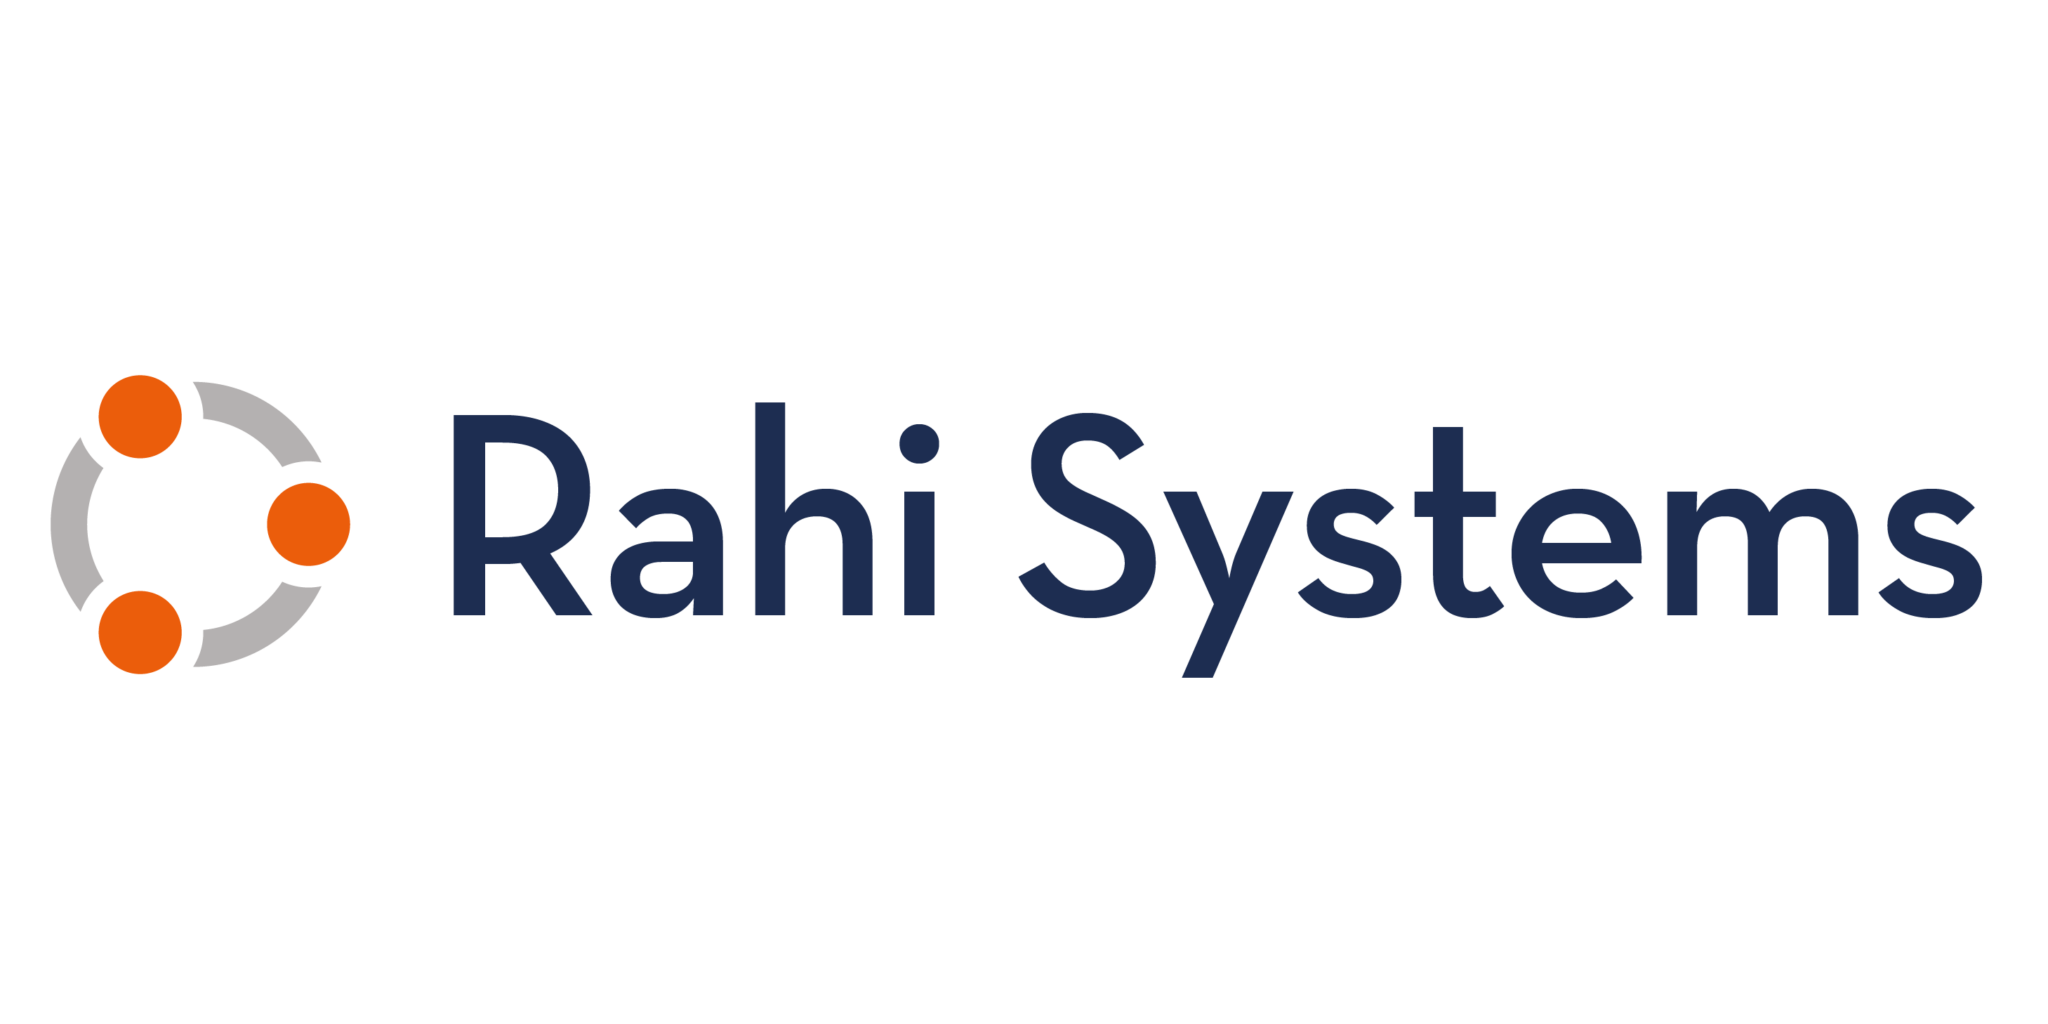 Rahi systems